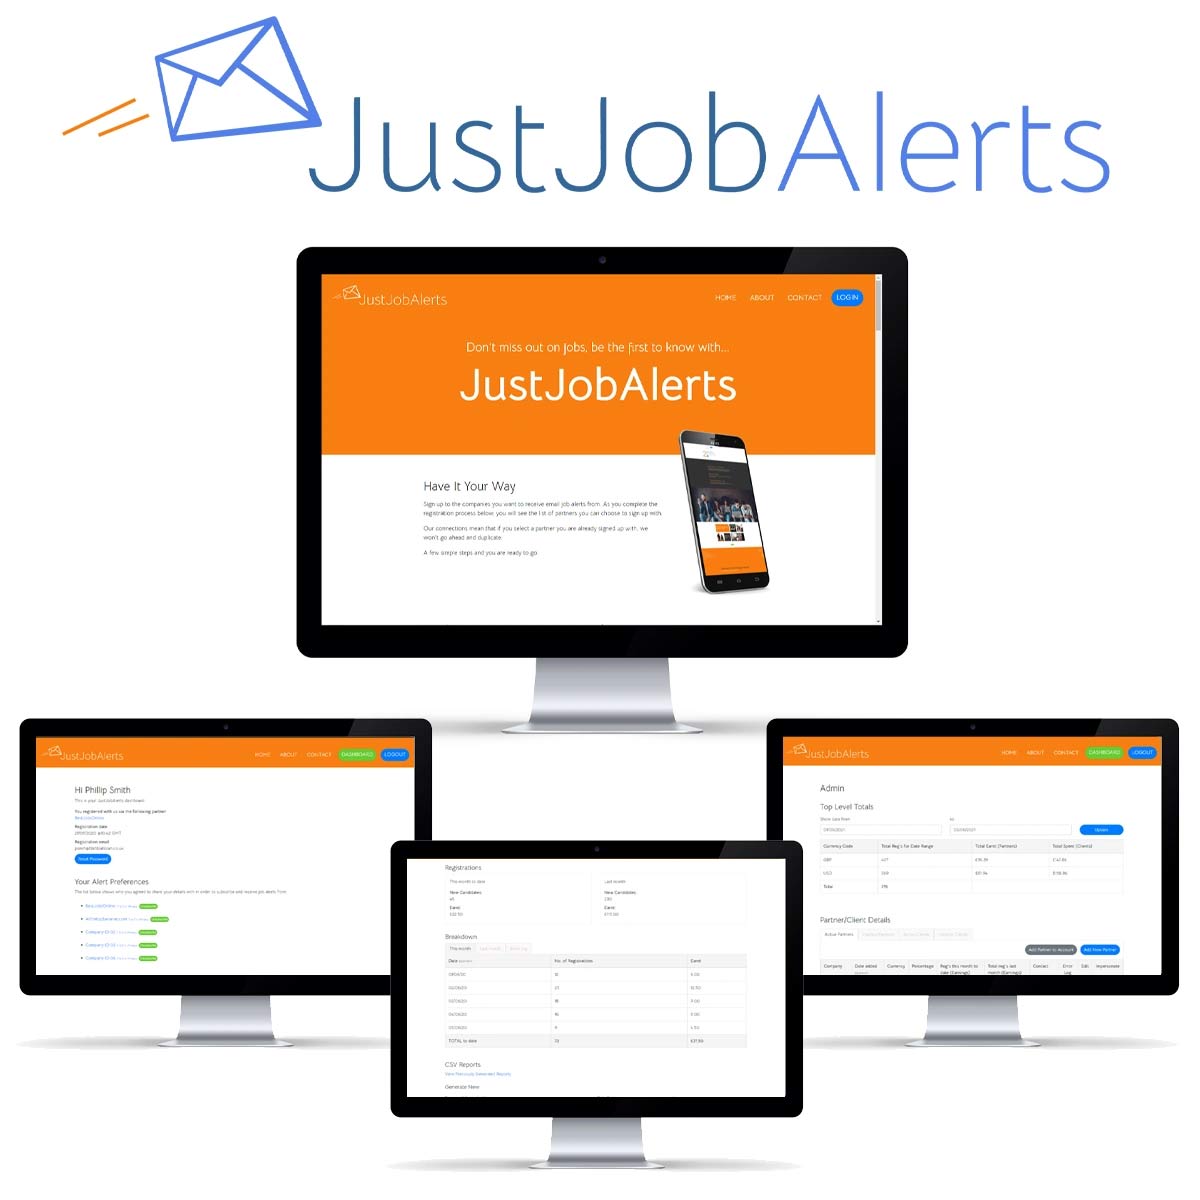 JustJobAlerts logo, desktop homepage and admin dashboards.